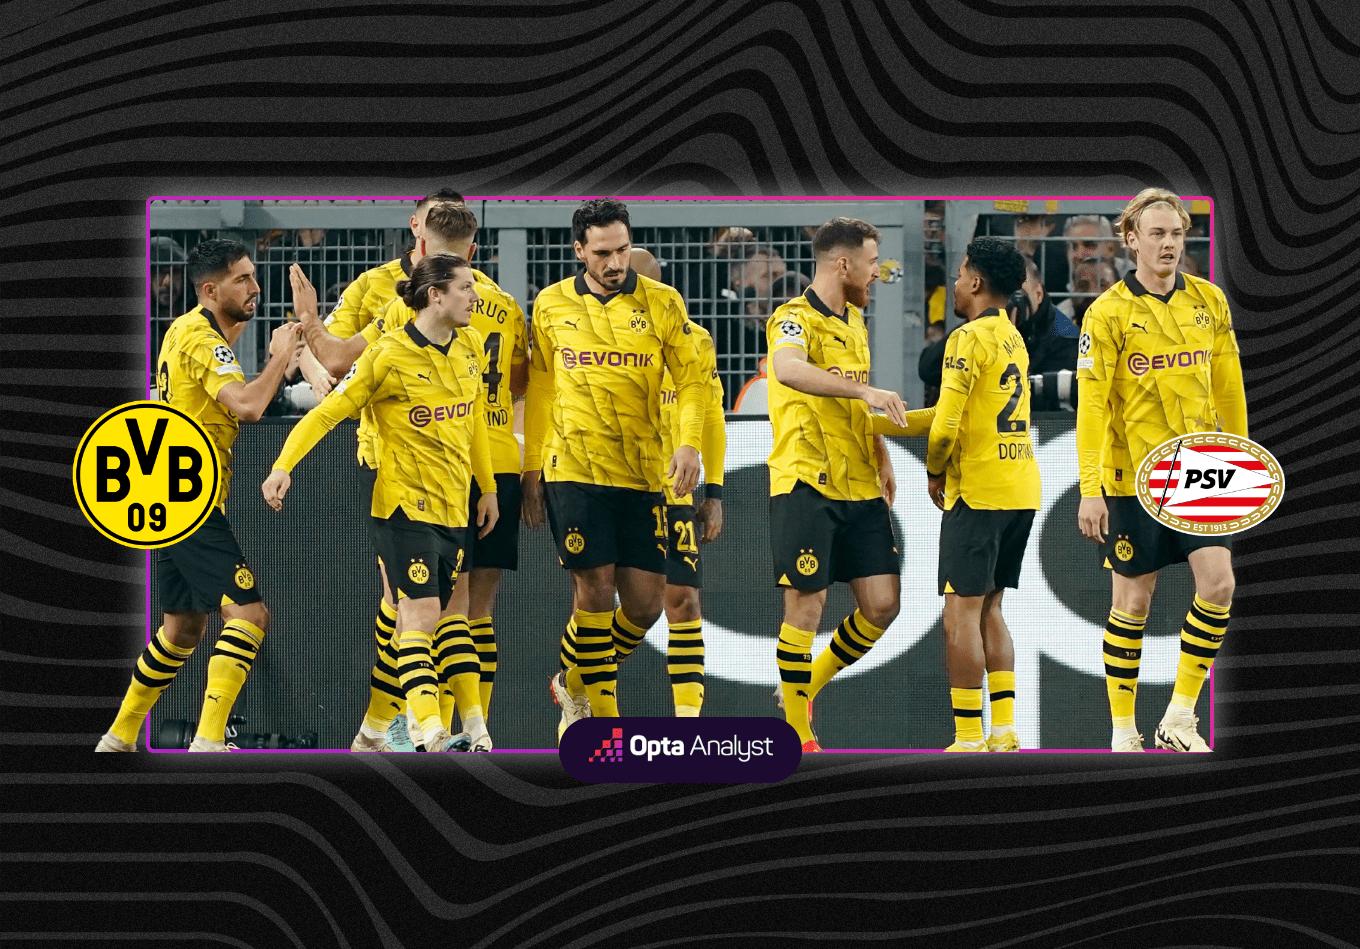 Dortmund 2-0 PSV stats (3-1 overall)